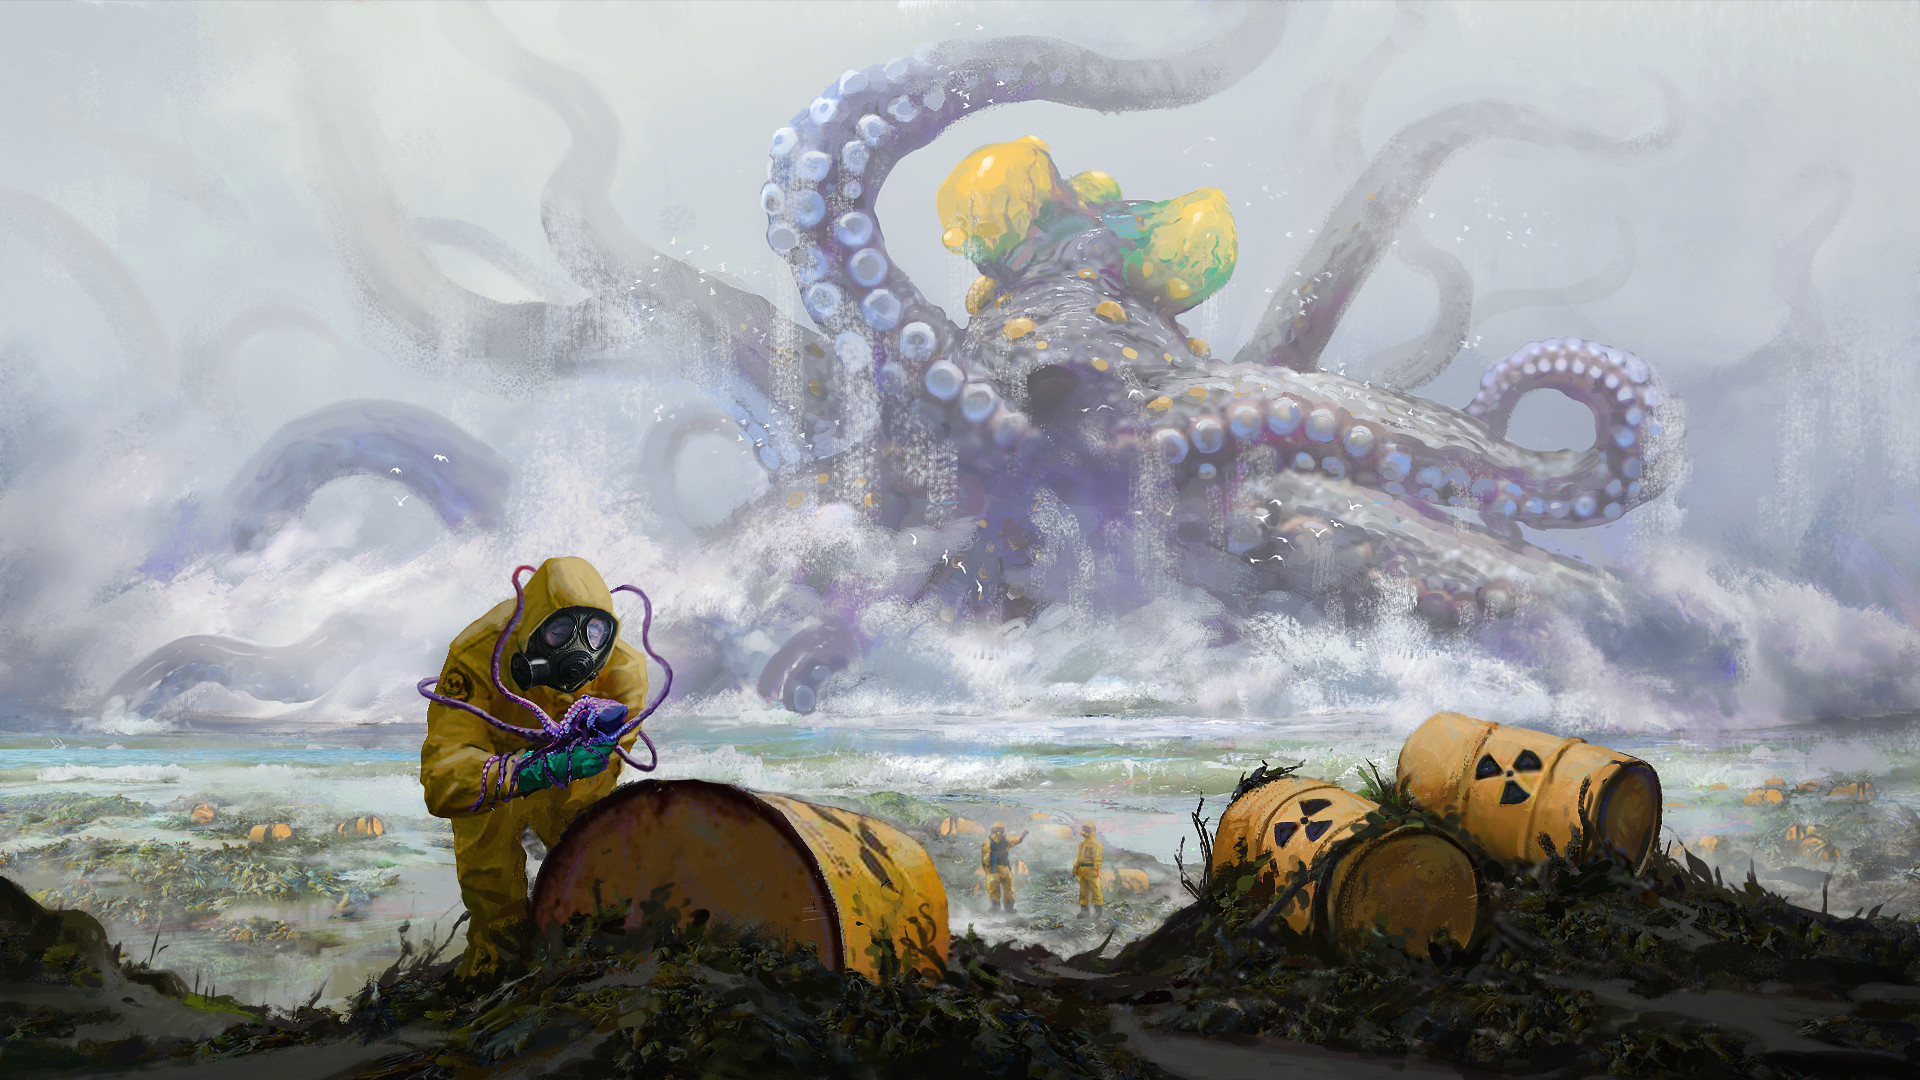 Illustration Octopus Giant Radiation Apocalyptic Science Fiction Digital Art Fan Art 1920x1080